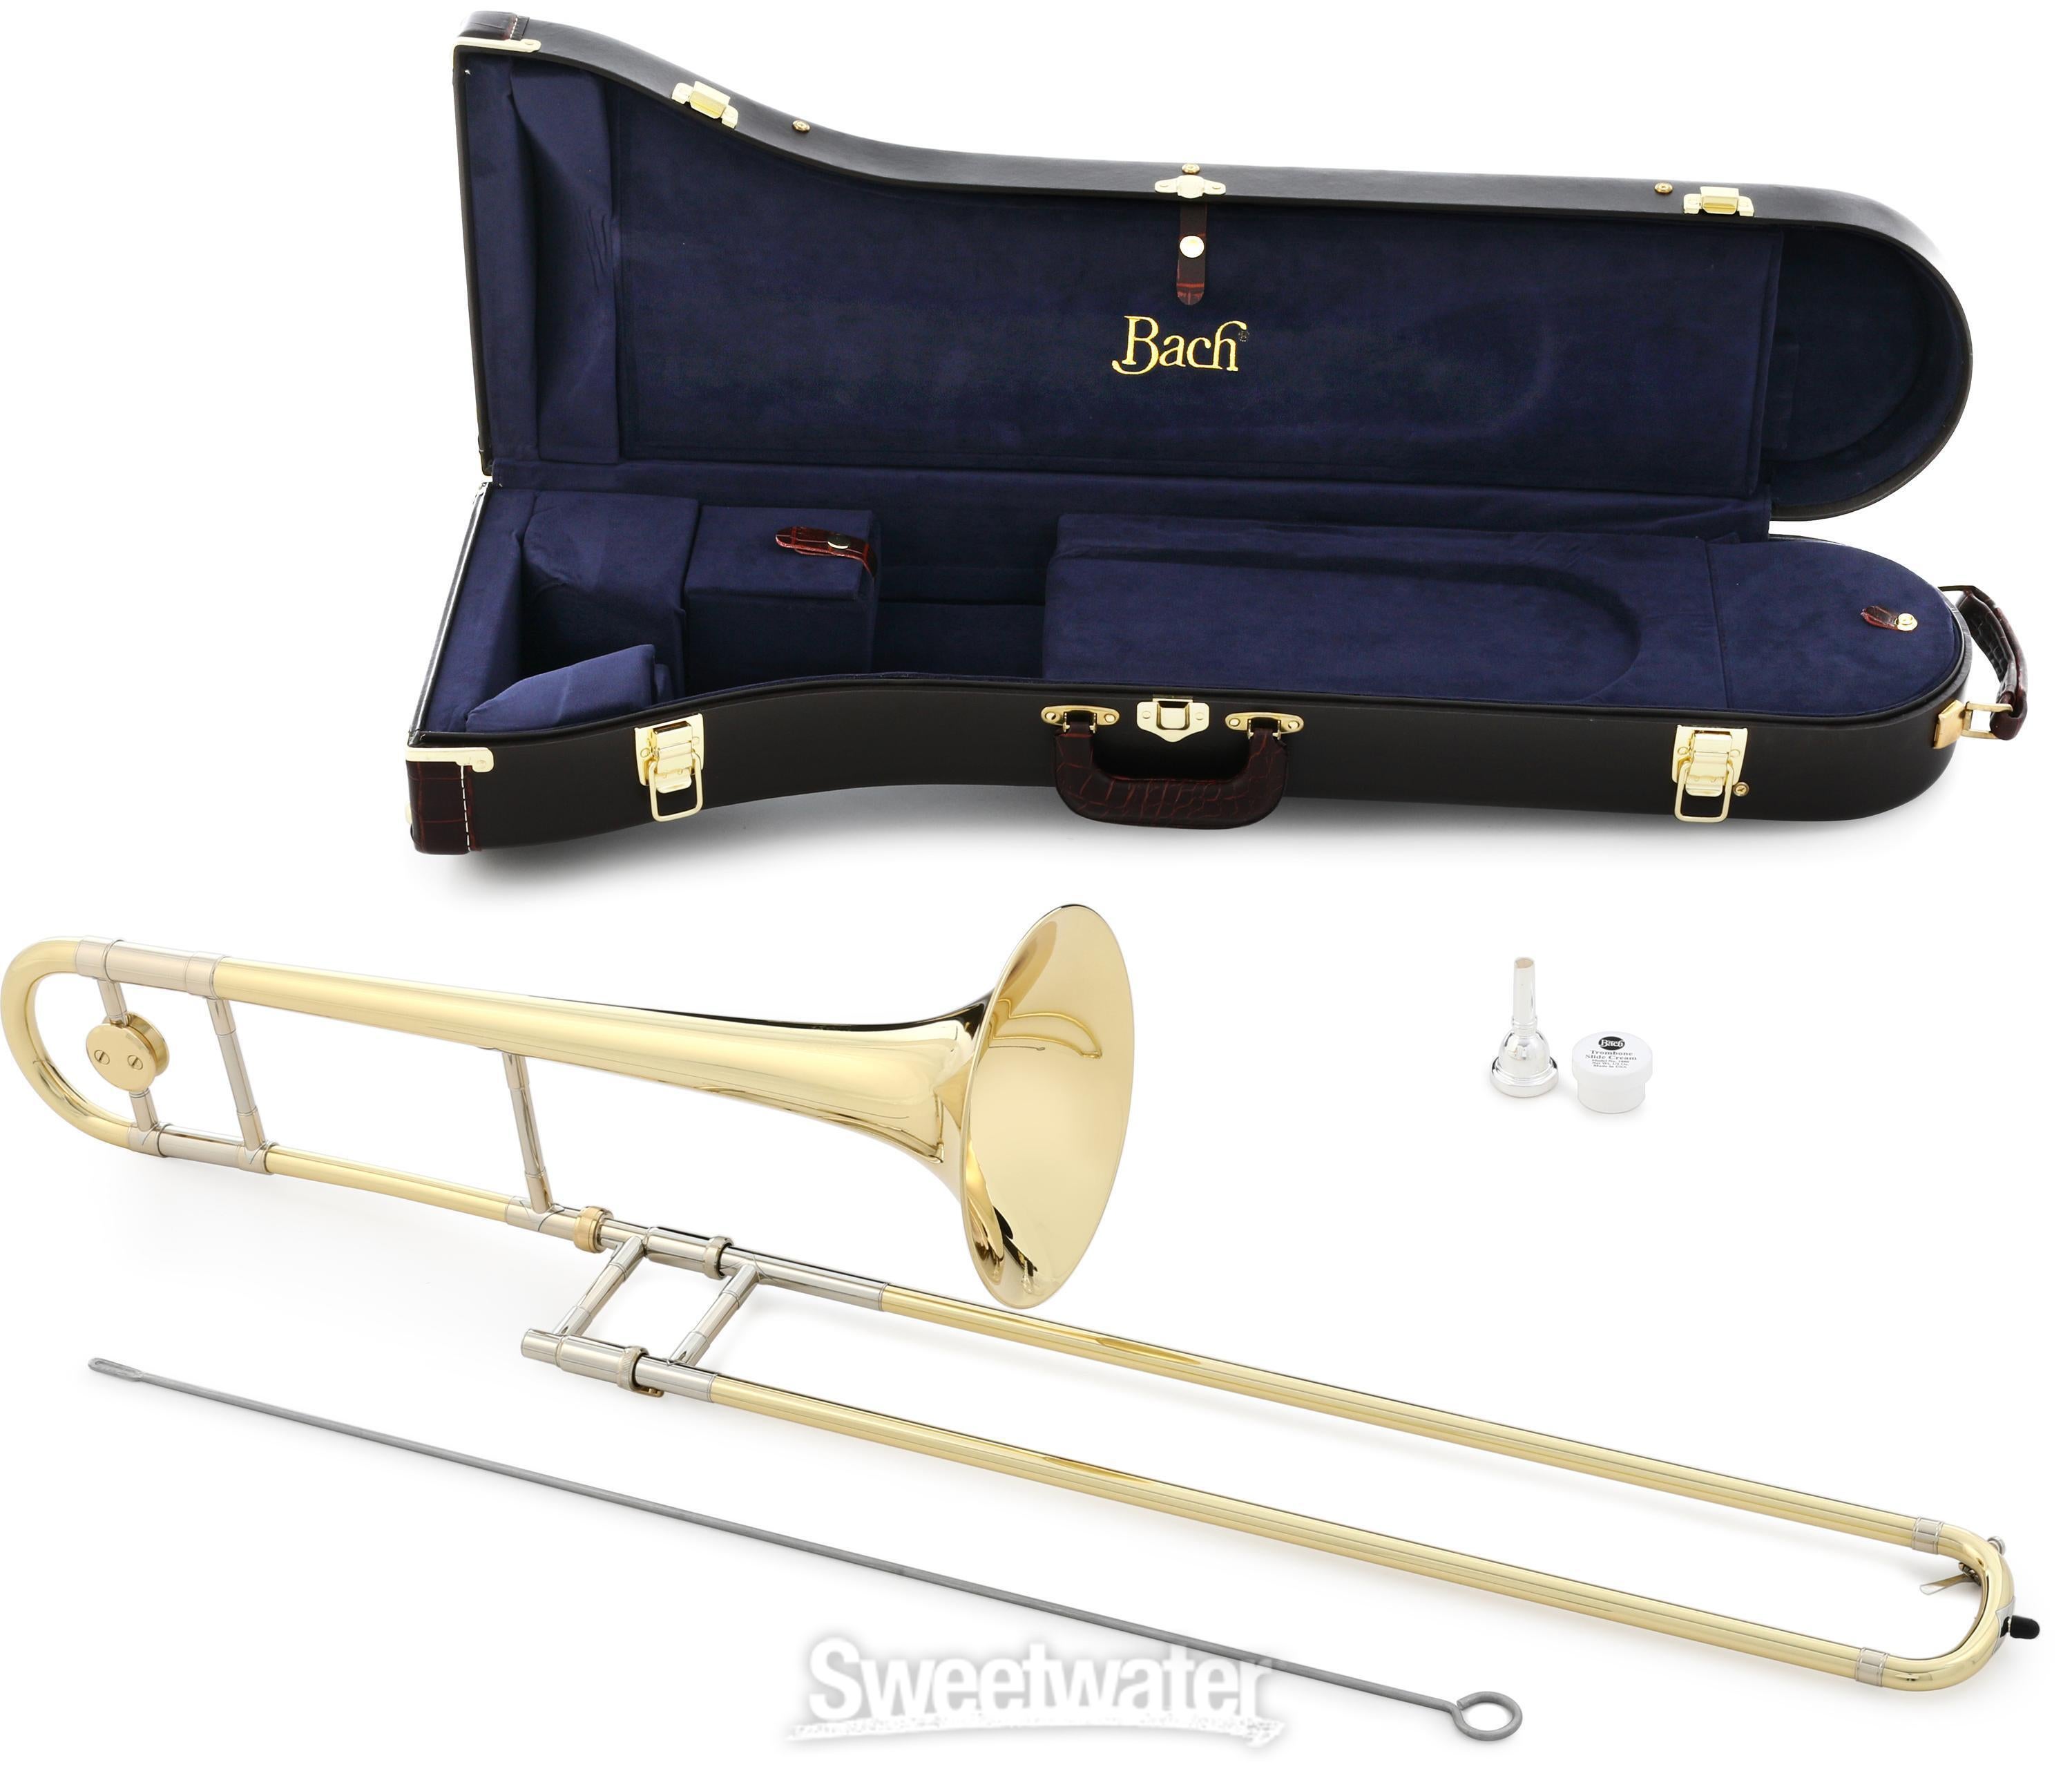 Bach Strdivarius model 36 トロンボーン - 管楽器・吹奏楽器